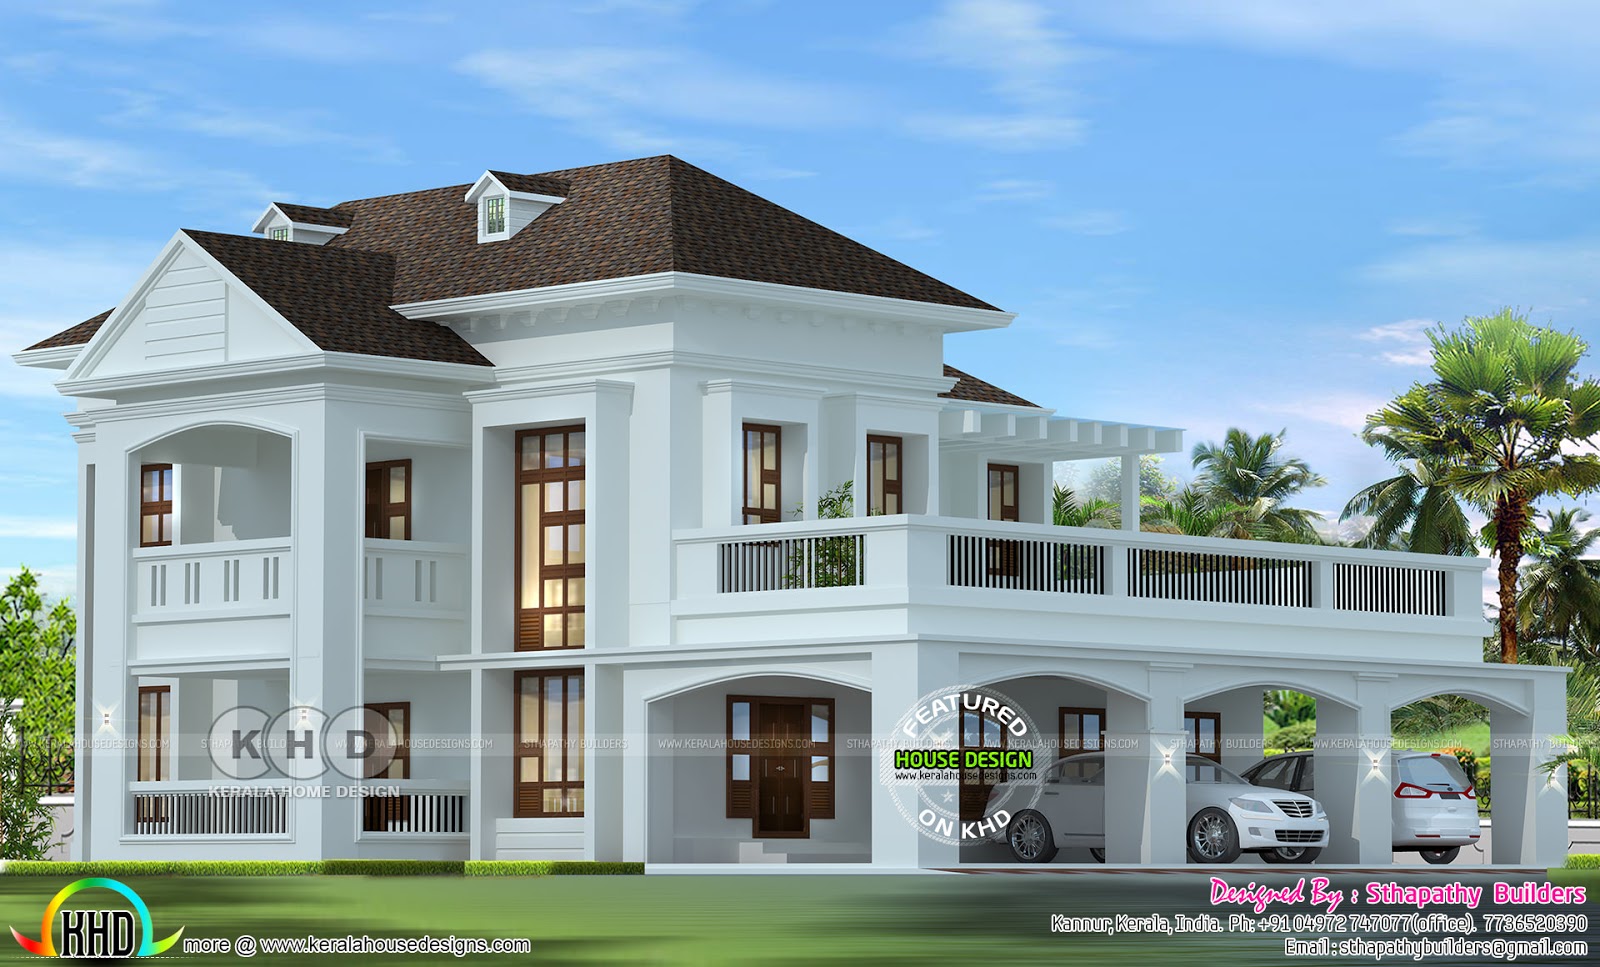 2724 Square Feet Colonial Home Design Kerala Home Design And